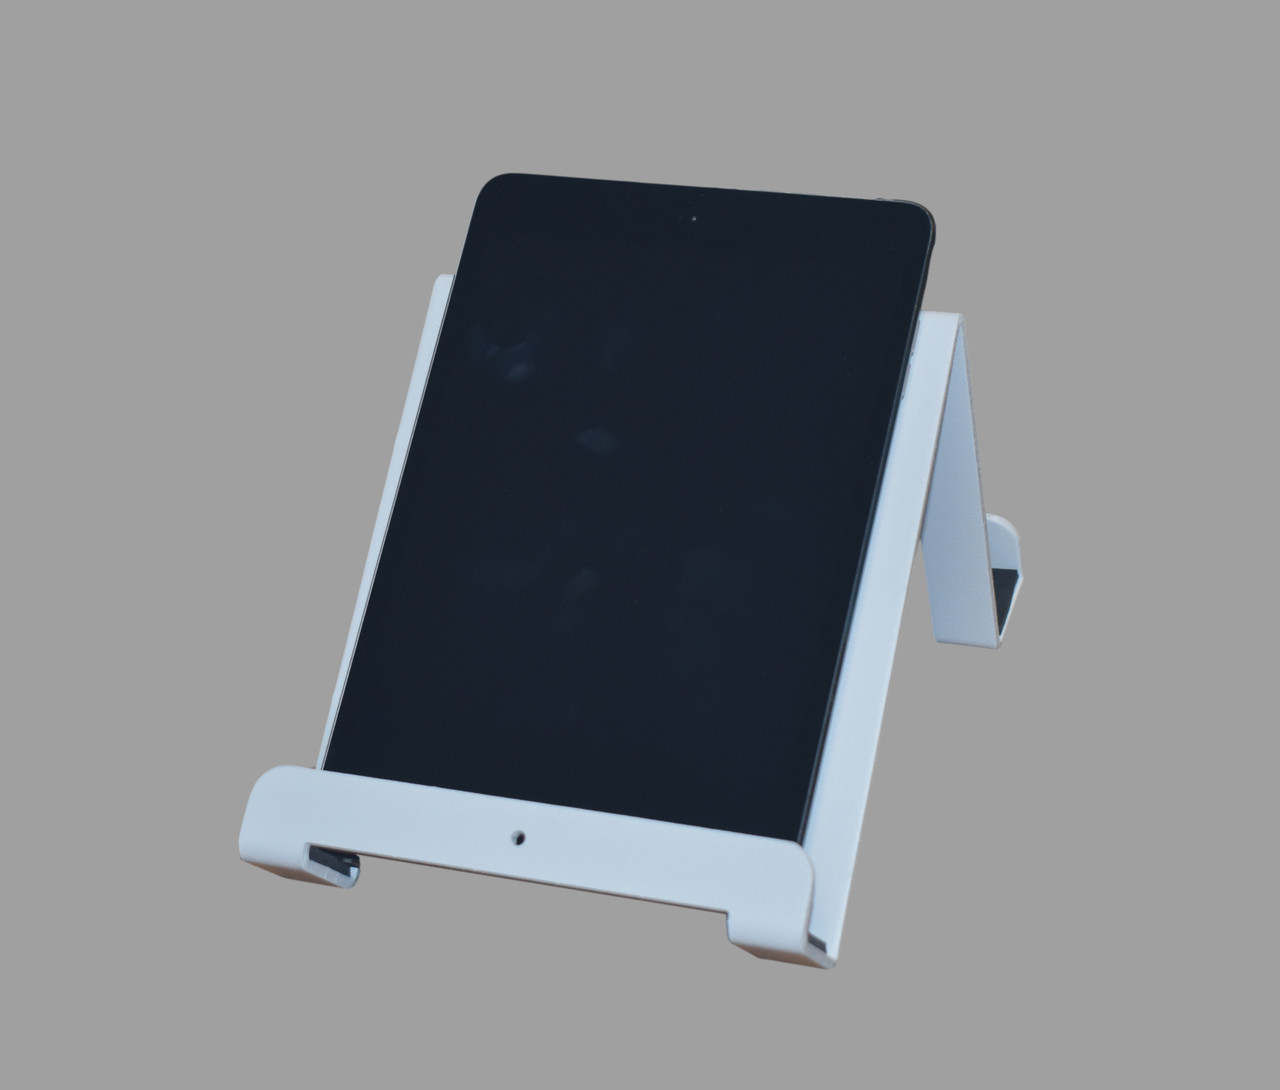 Portable Multi-functional Desktop Holder for iPad Tablet & Phone